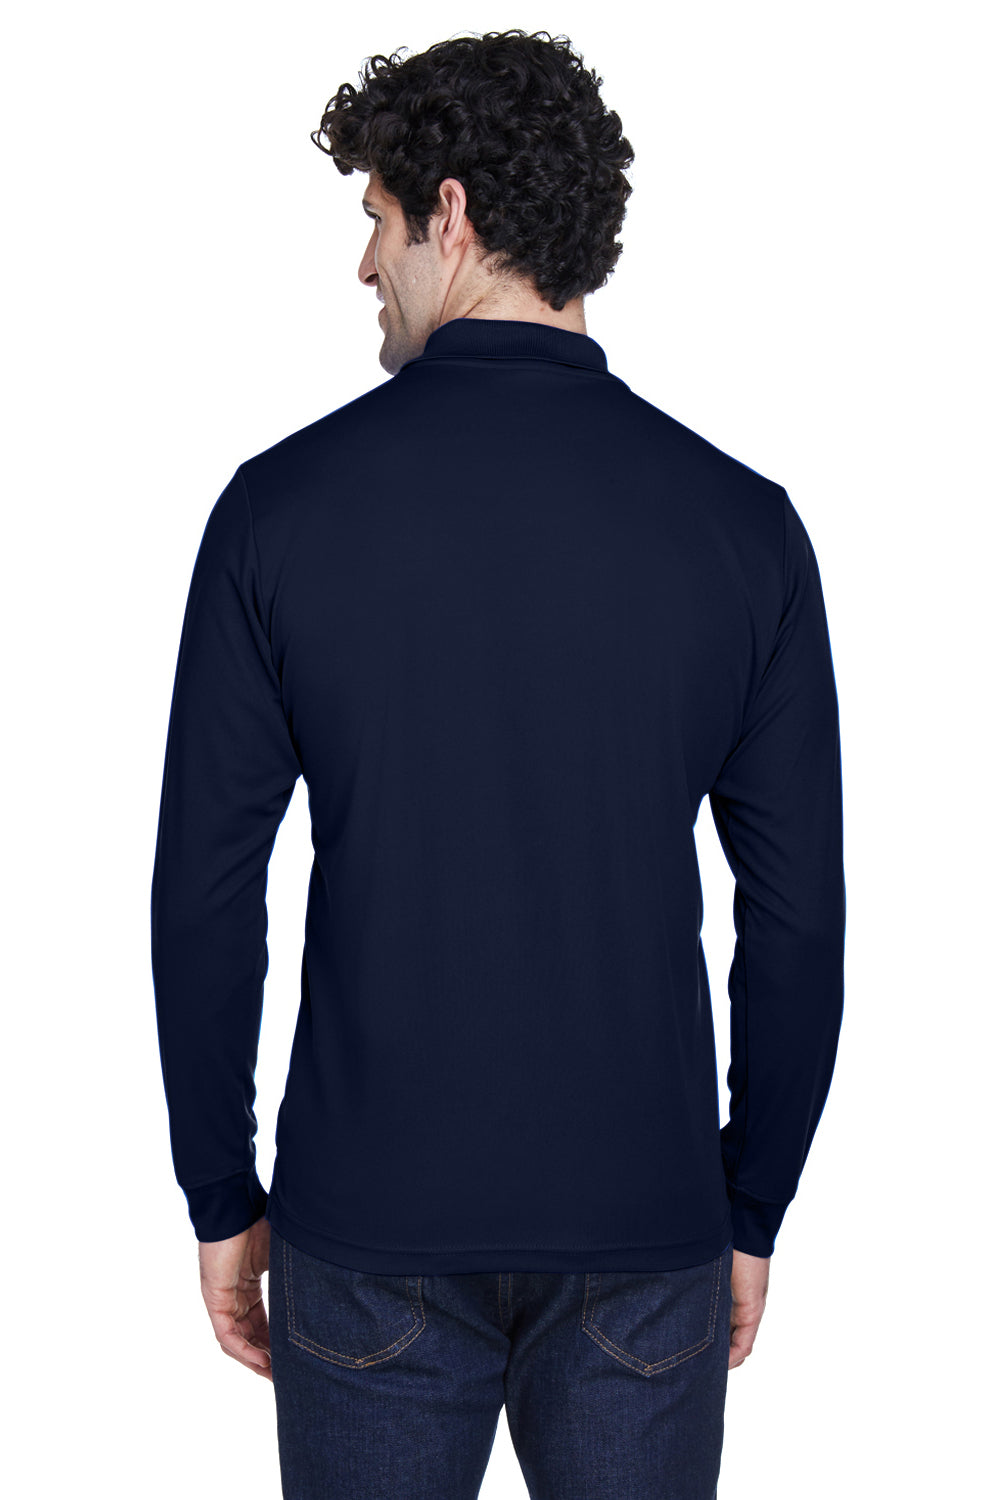 Core 365 88192 Mens Pinnacle Performance Moisture Wicking Long Sleeve Polo Shirt Navy Blue Back